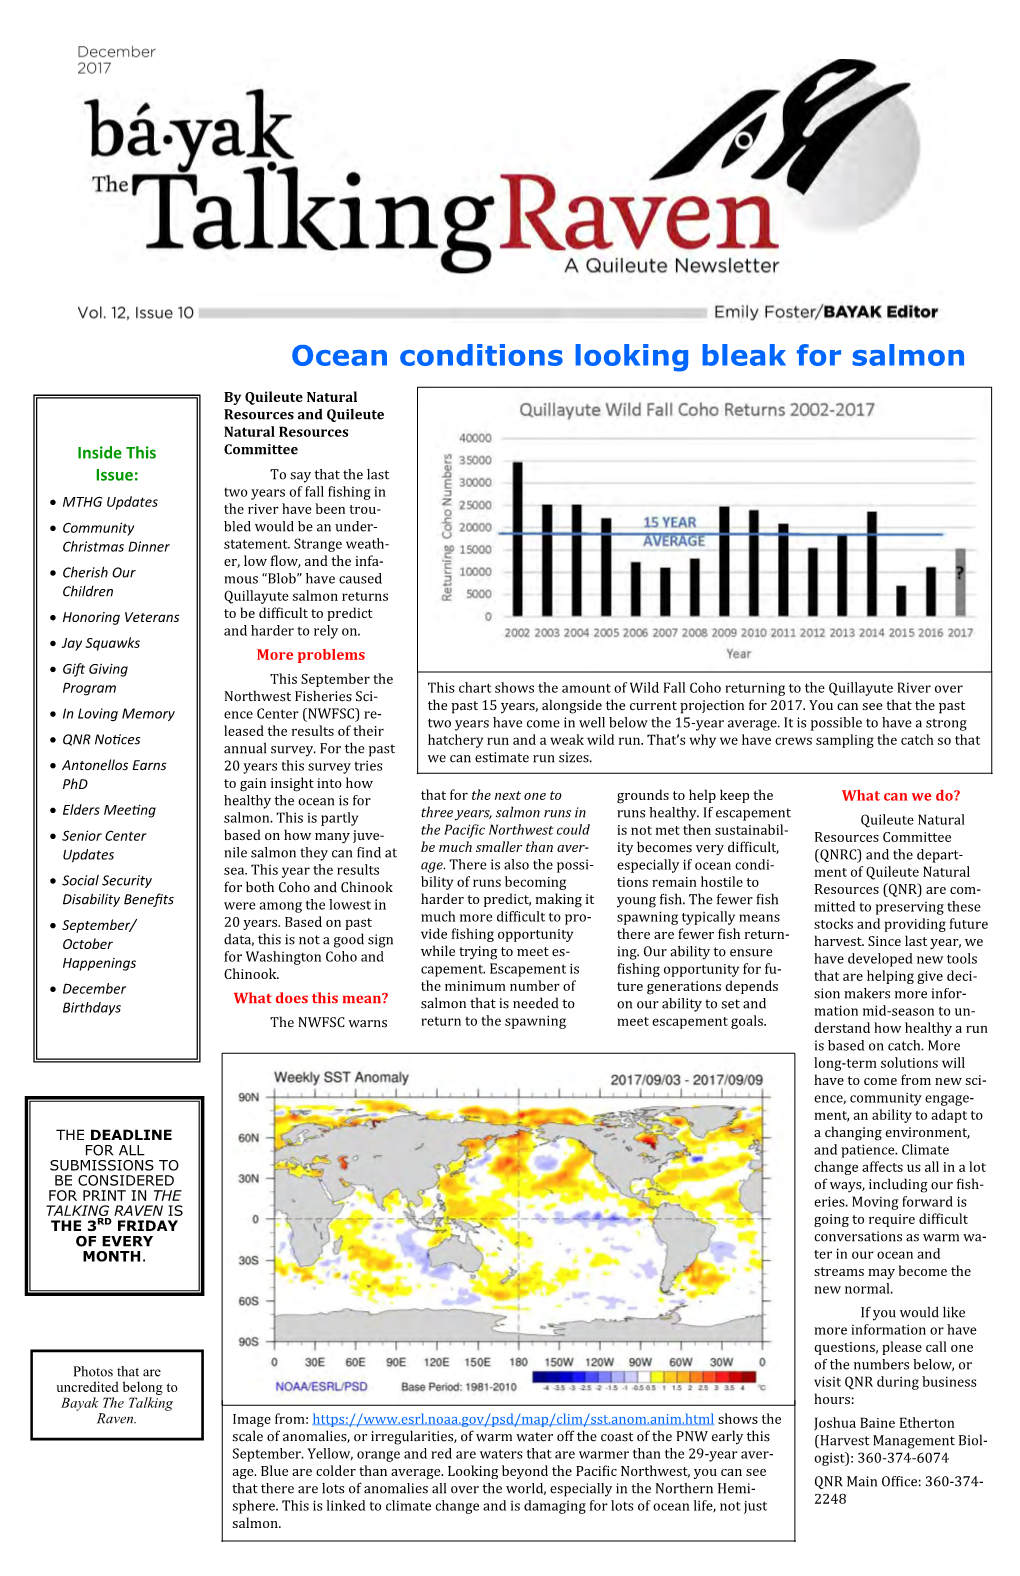 Ocean Conditions Looking Bleak for Salmon